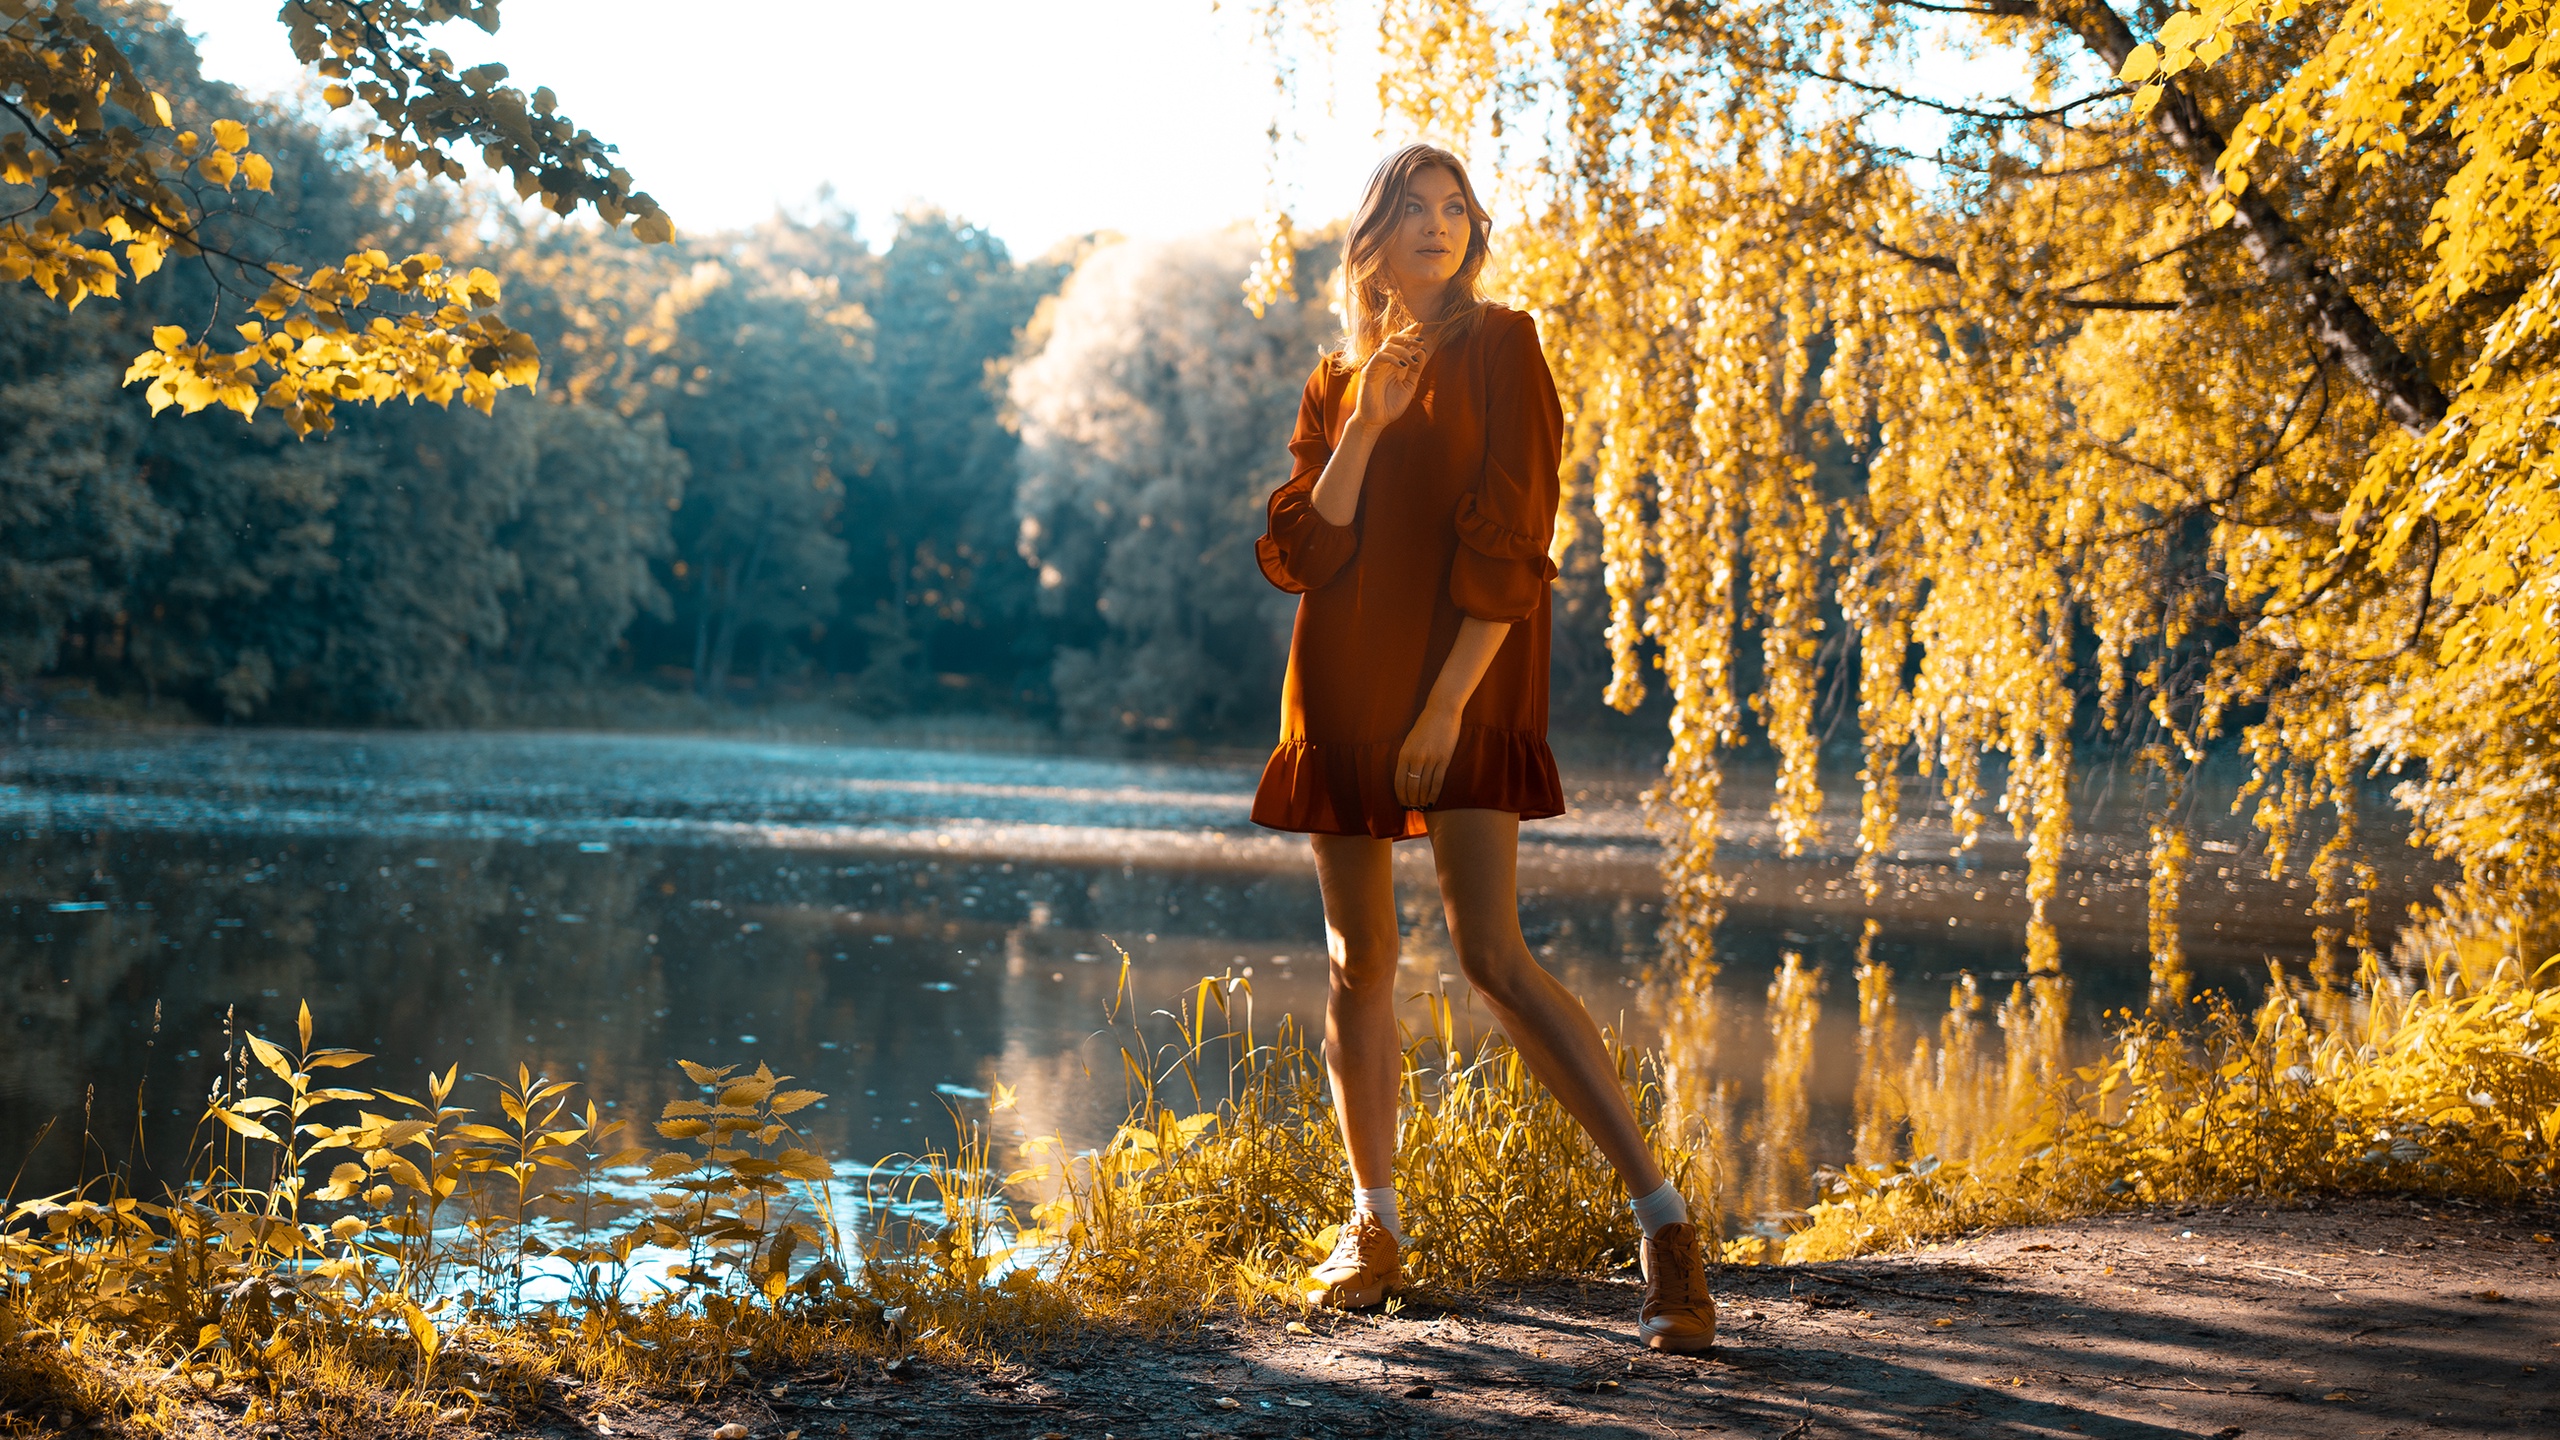 People 2560x1440 women model Vladimir Stefanovich women outdoors trees fall water red clothing looking away standing legs